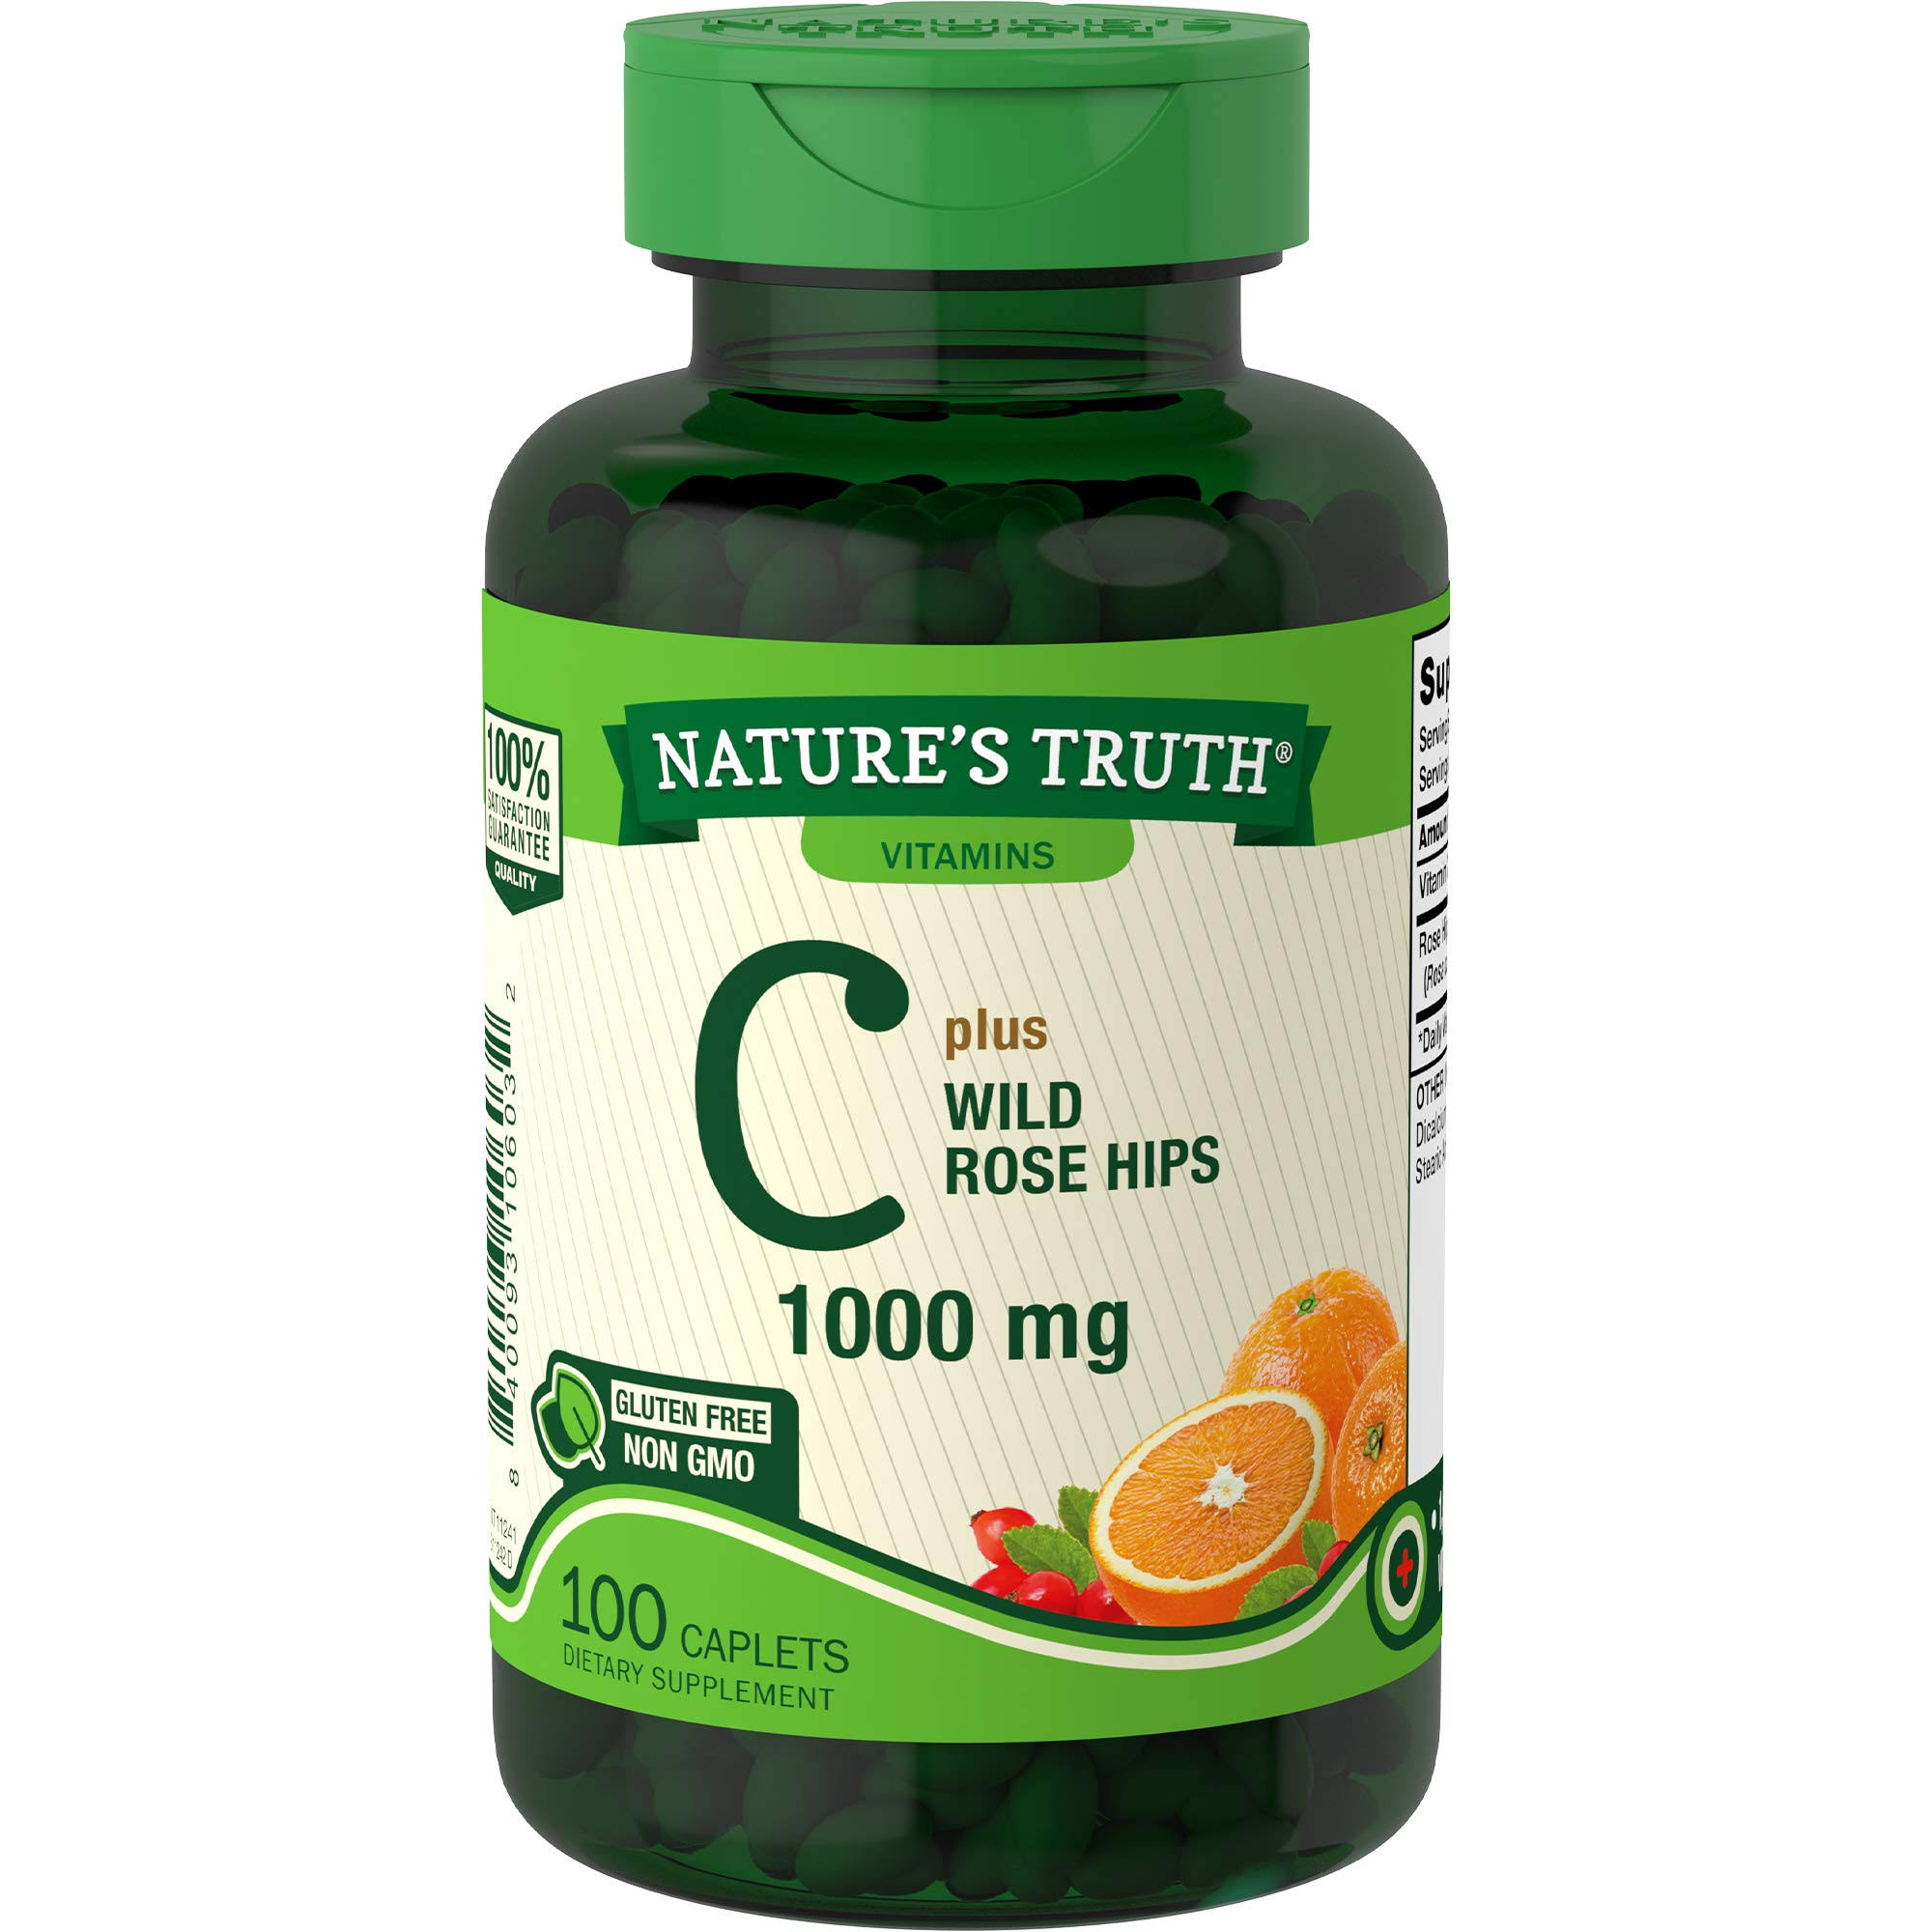 Natures Truth Vitamin C, 1000 mg, Coated Caplets - 100 caplets